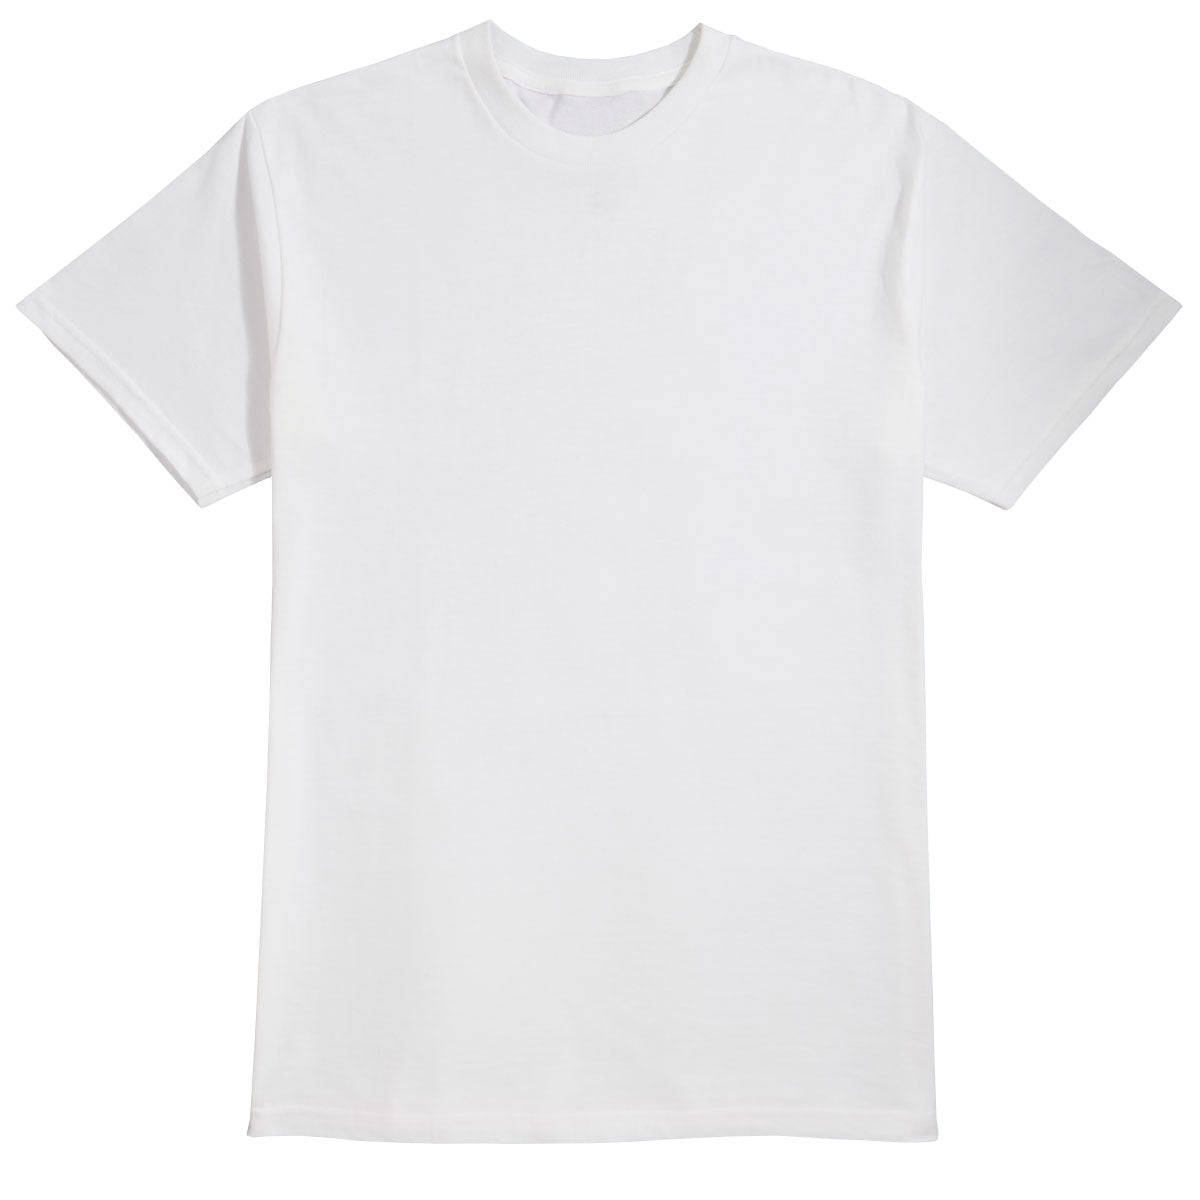 Converse Flash Sheet T-Shirt - White - LG image 1